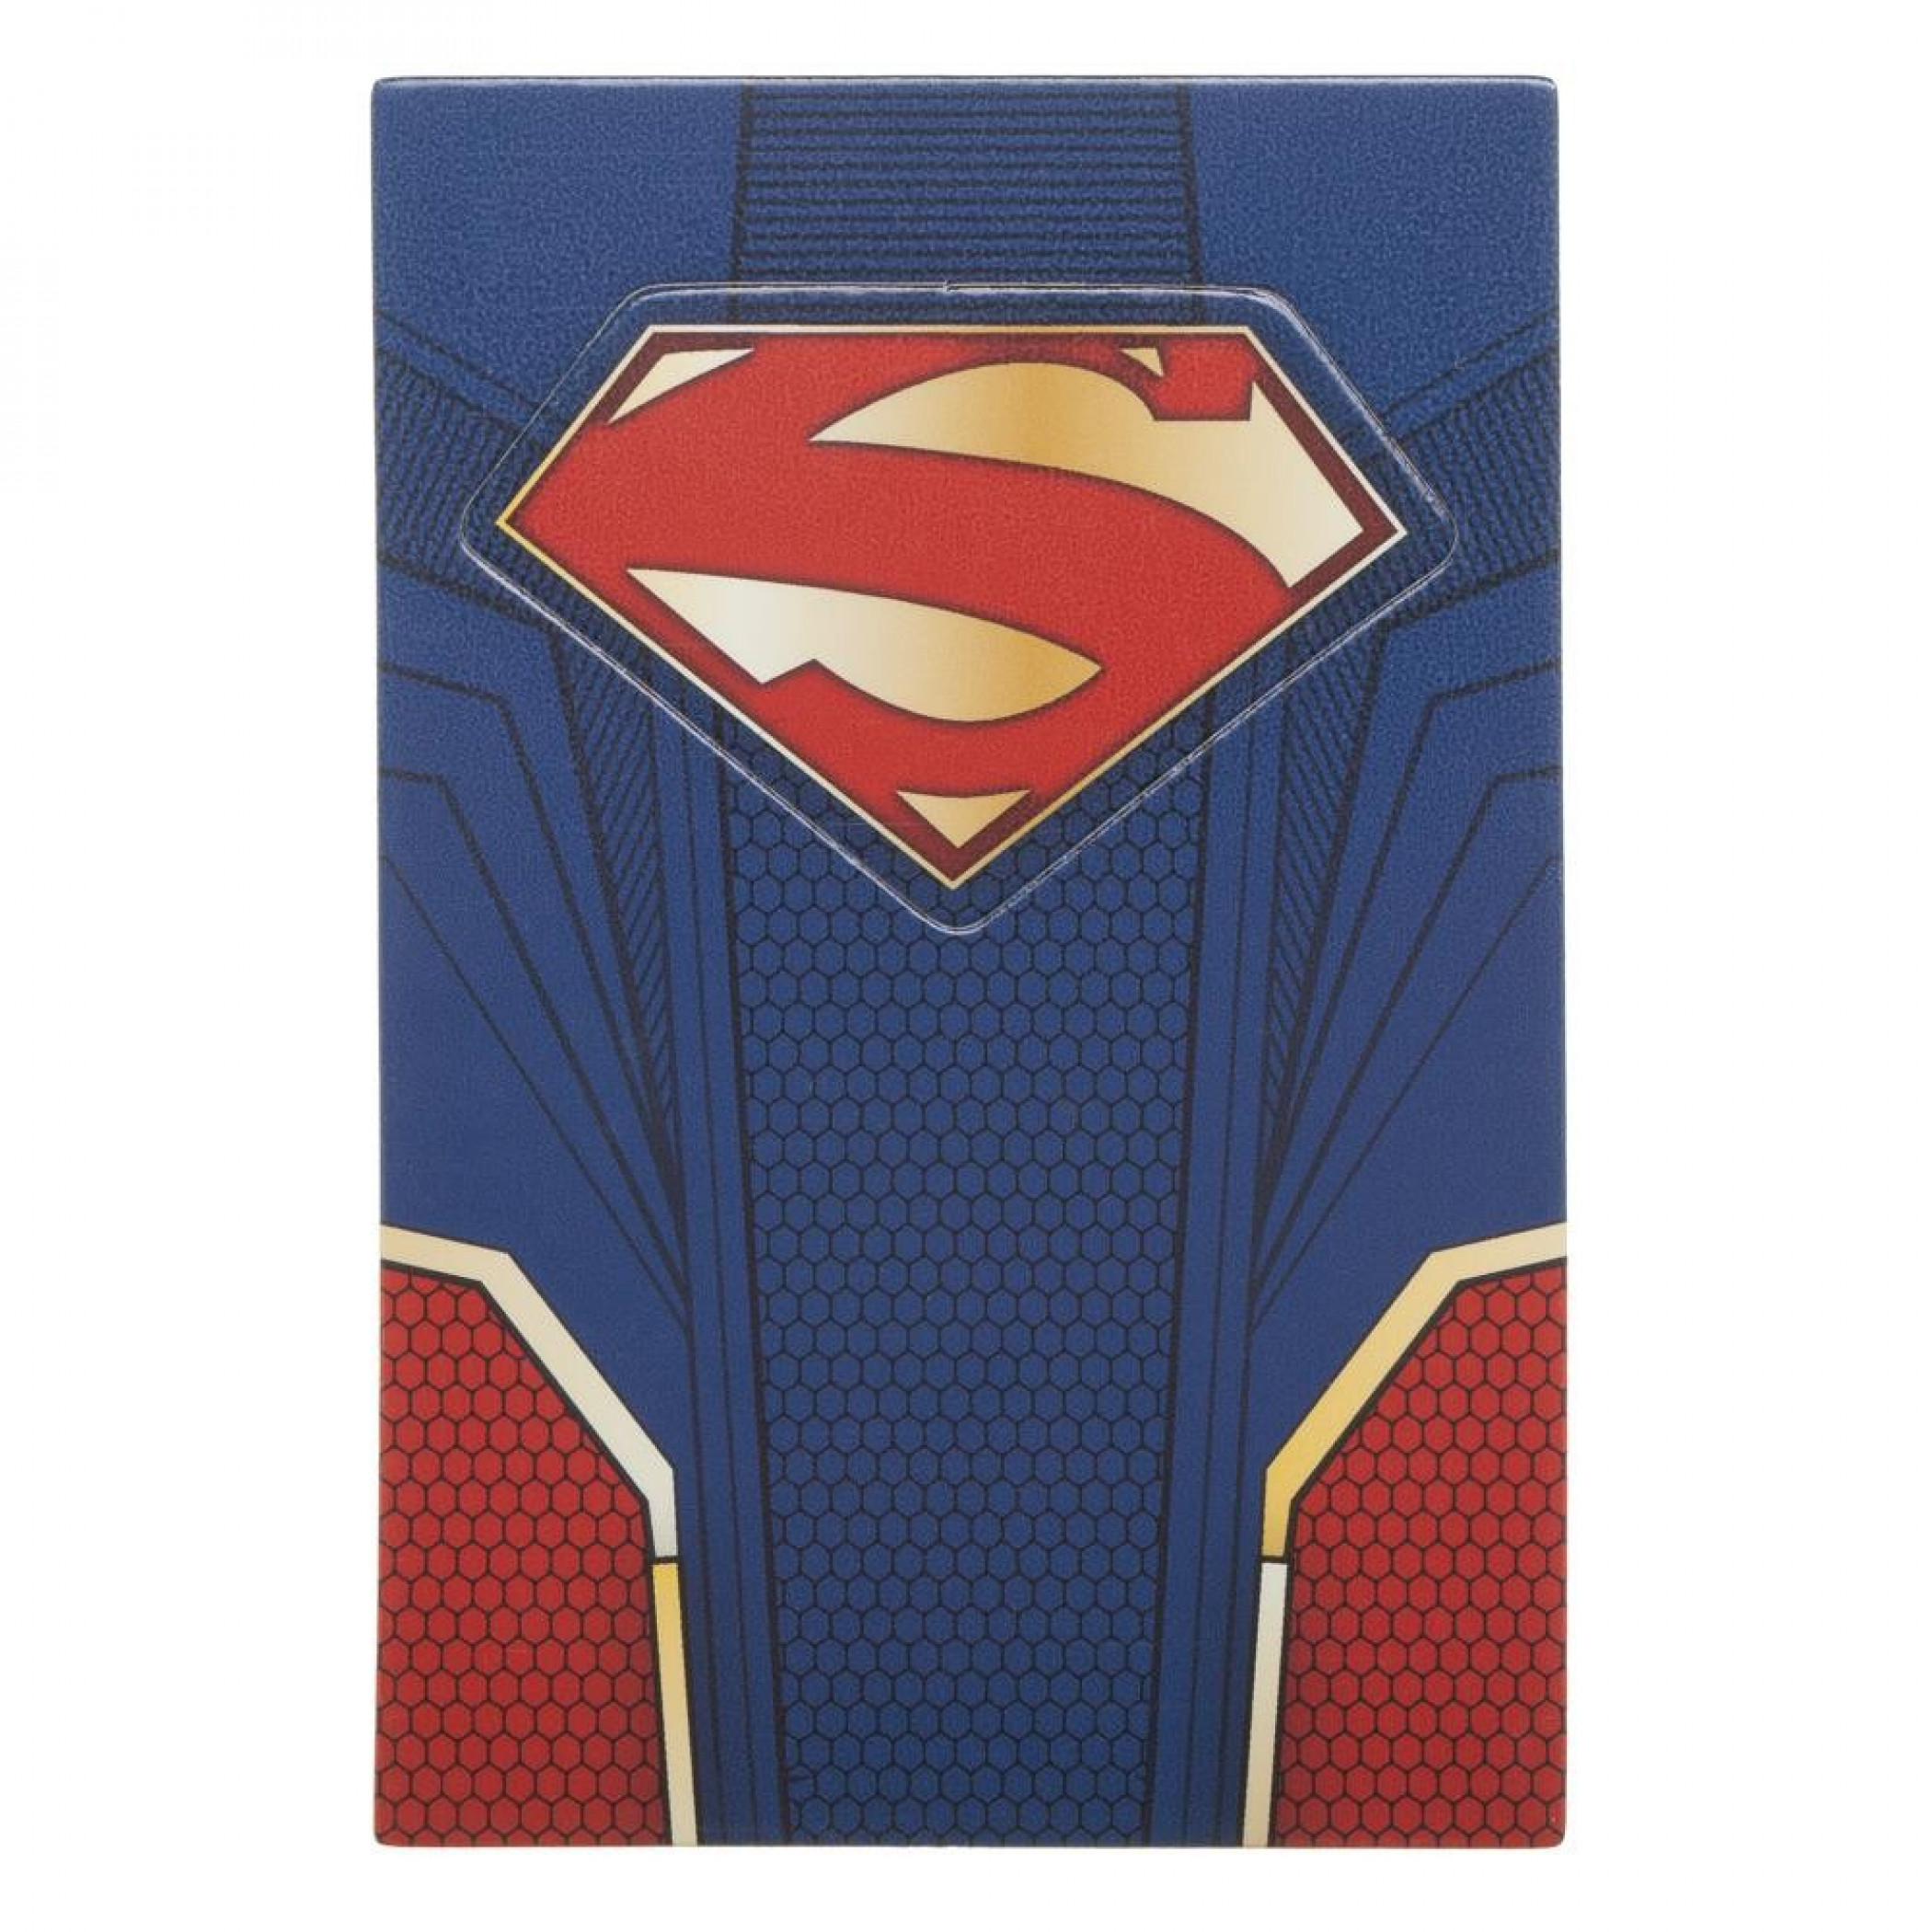 Superman Suit-Up Lanyard